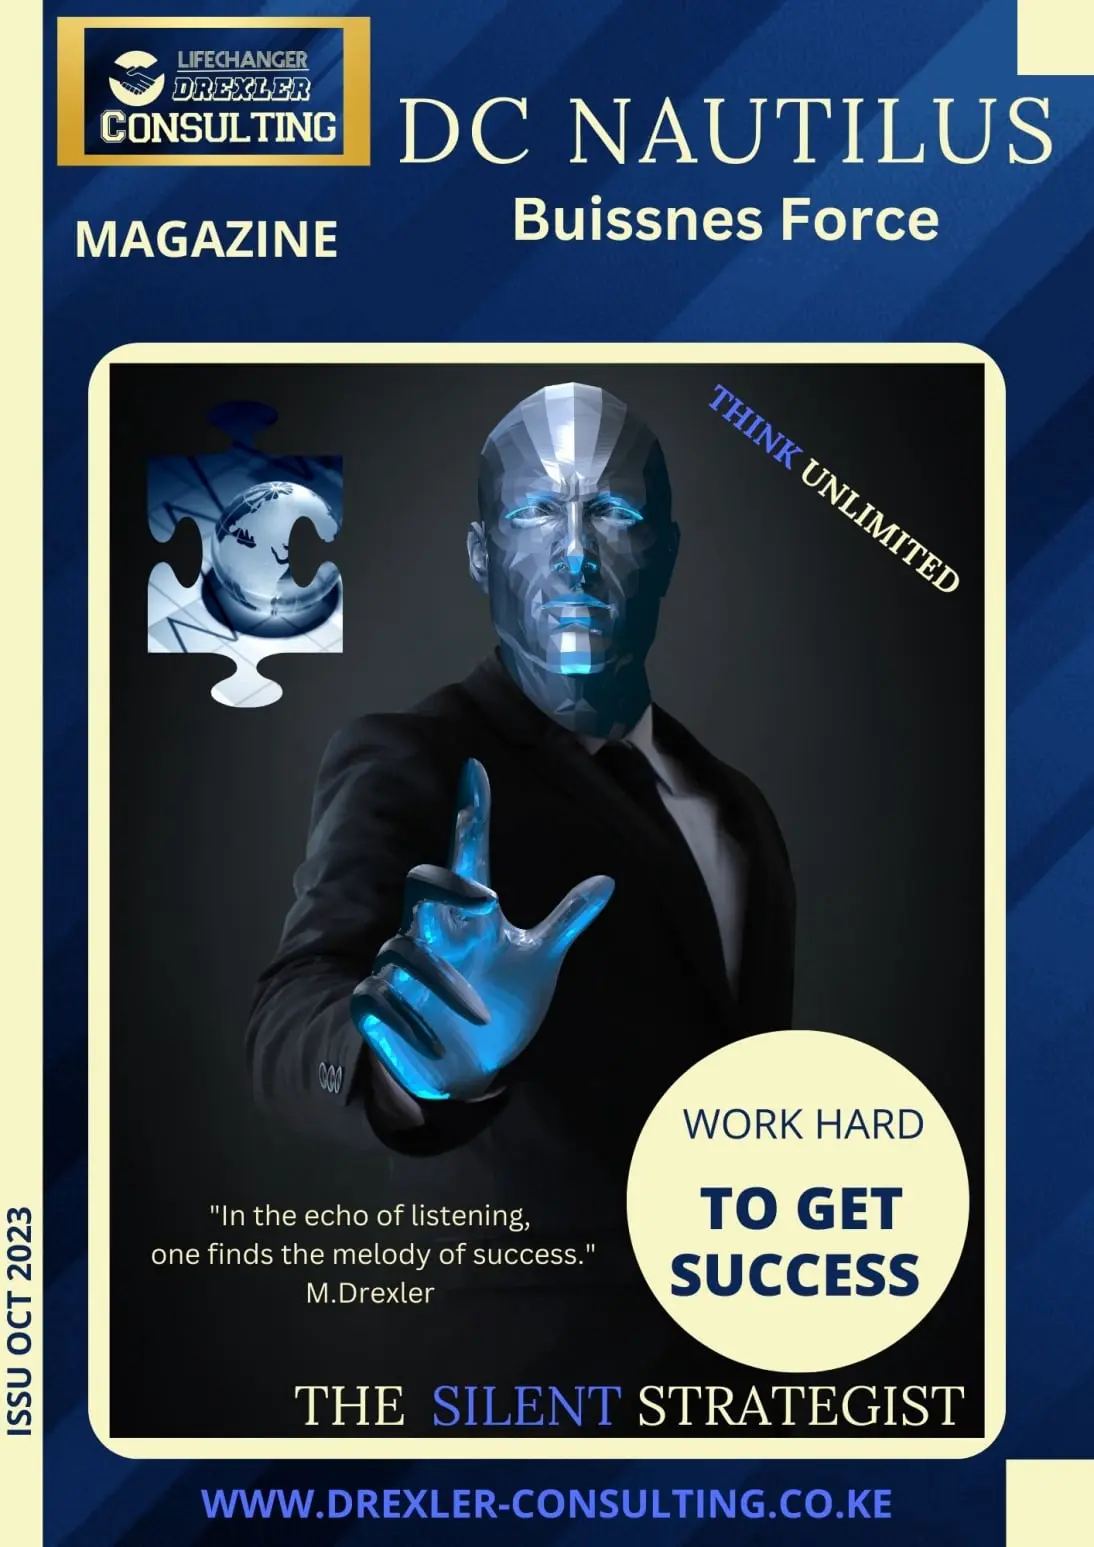 DC Nautilus Buisness Force news magazin, to get success m.drexler